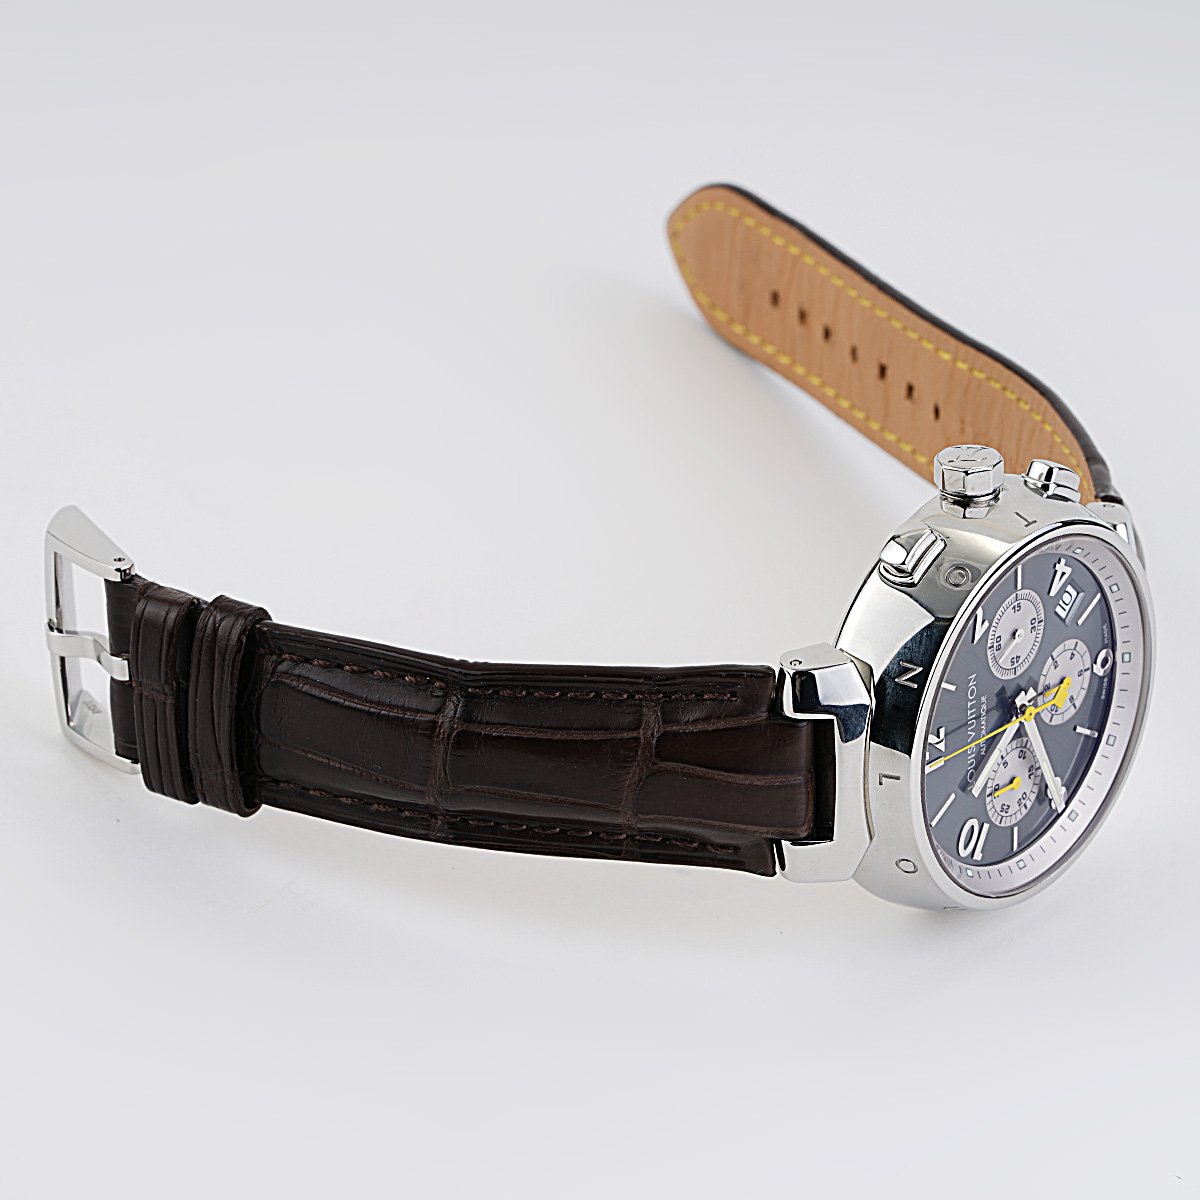 Louis Vuitton Tambour Q1120 Chronograph Grey Dial Leather 41mm Circa 2007